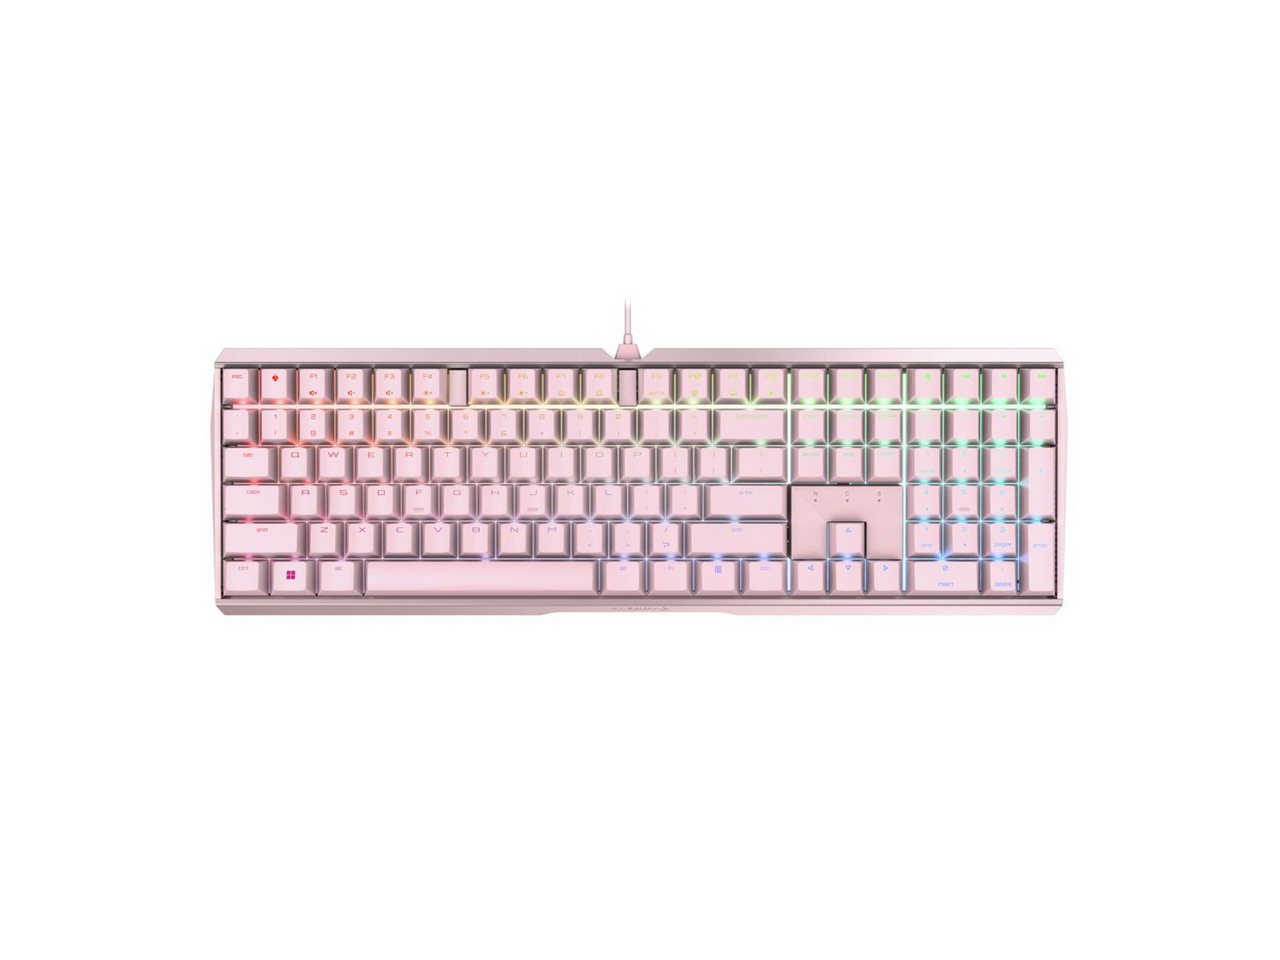 Cherry Cherry MX Board 3.0S Gaming RGB Tastatur, MX-Brown, pink Gaming-Tastatur von Cherry